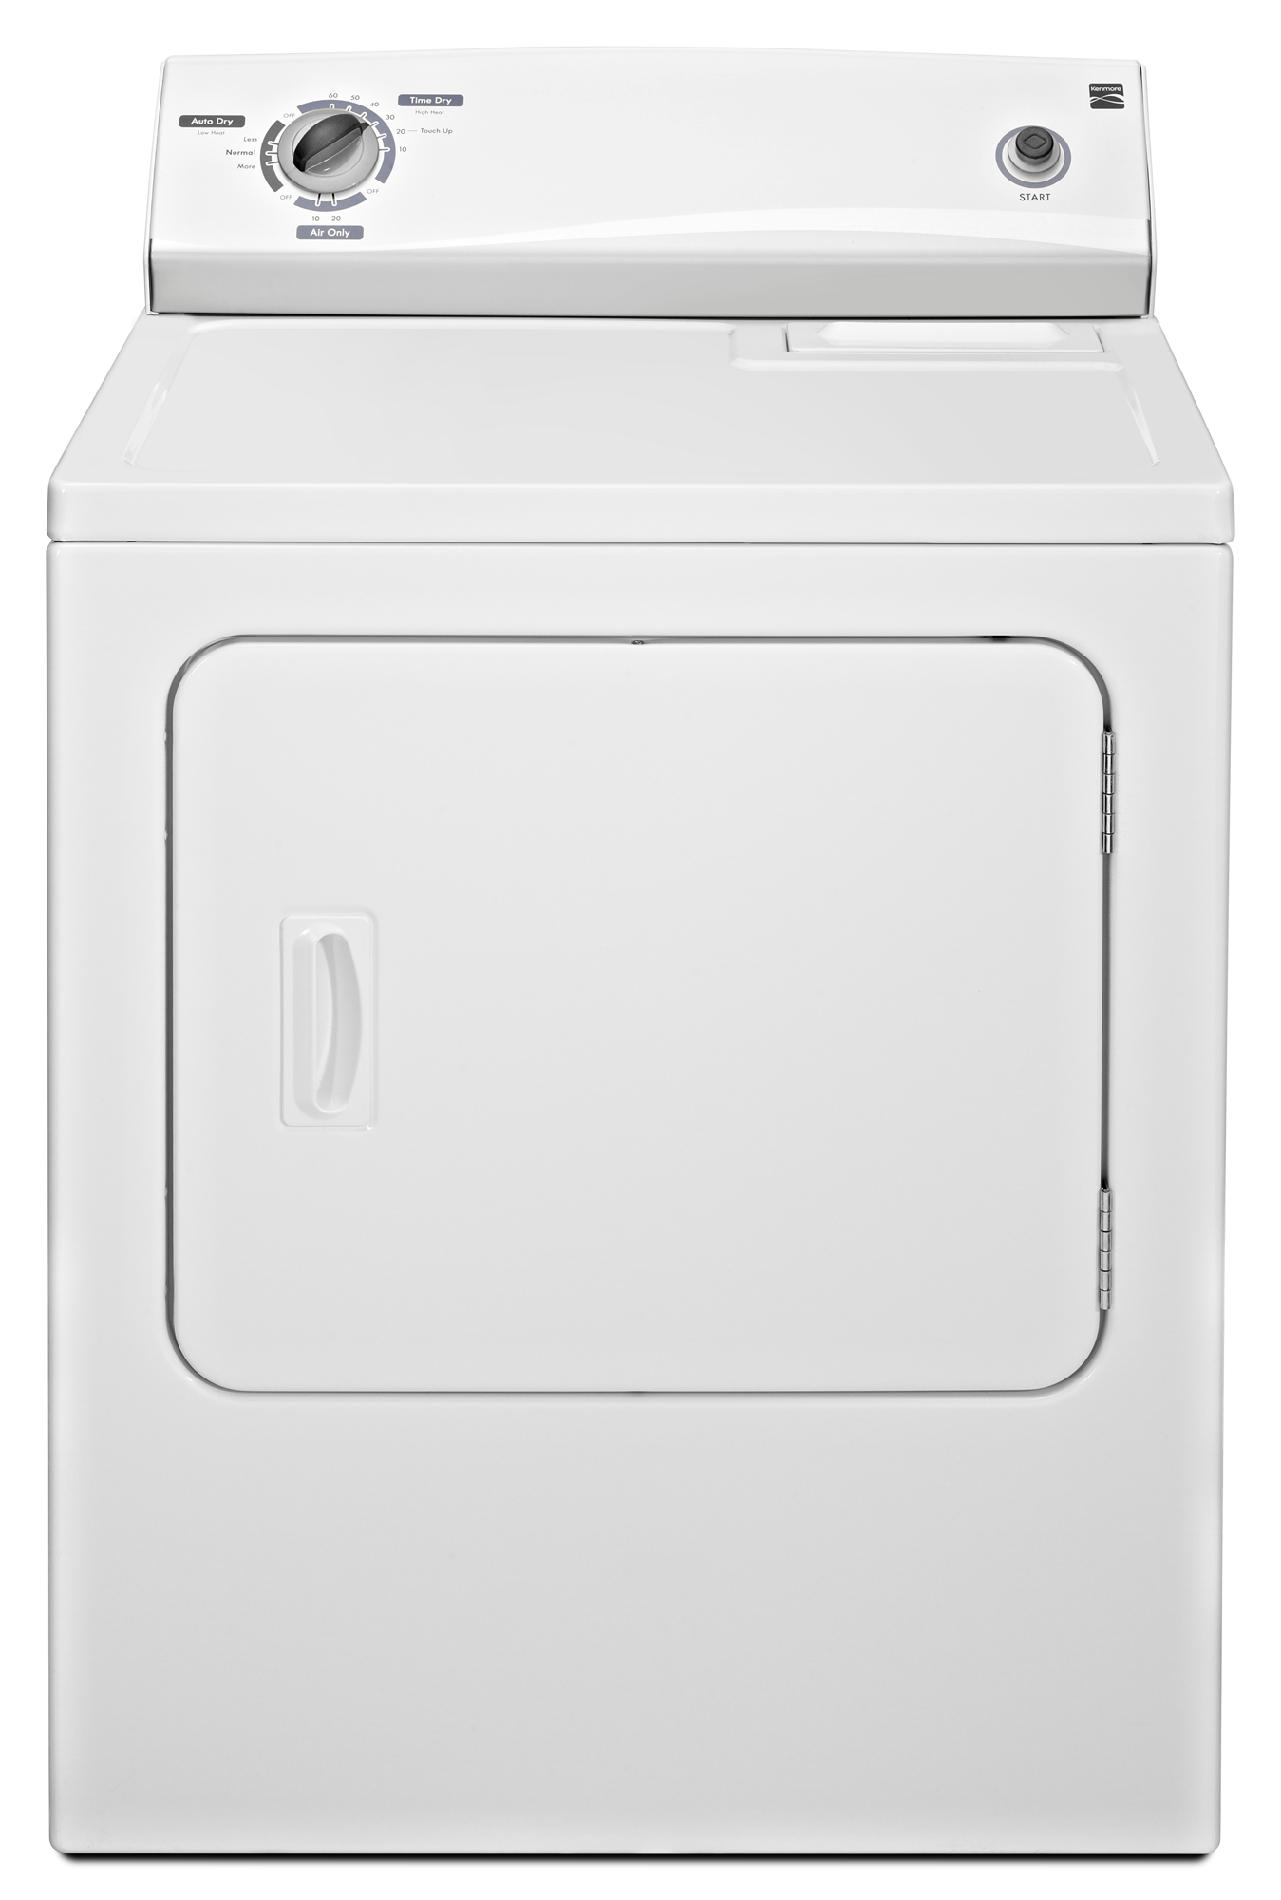 Kenmore 6.5 cu. ft. Electric Dryer - White 6.0 cu.ft. - 6.9 cu.ft.